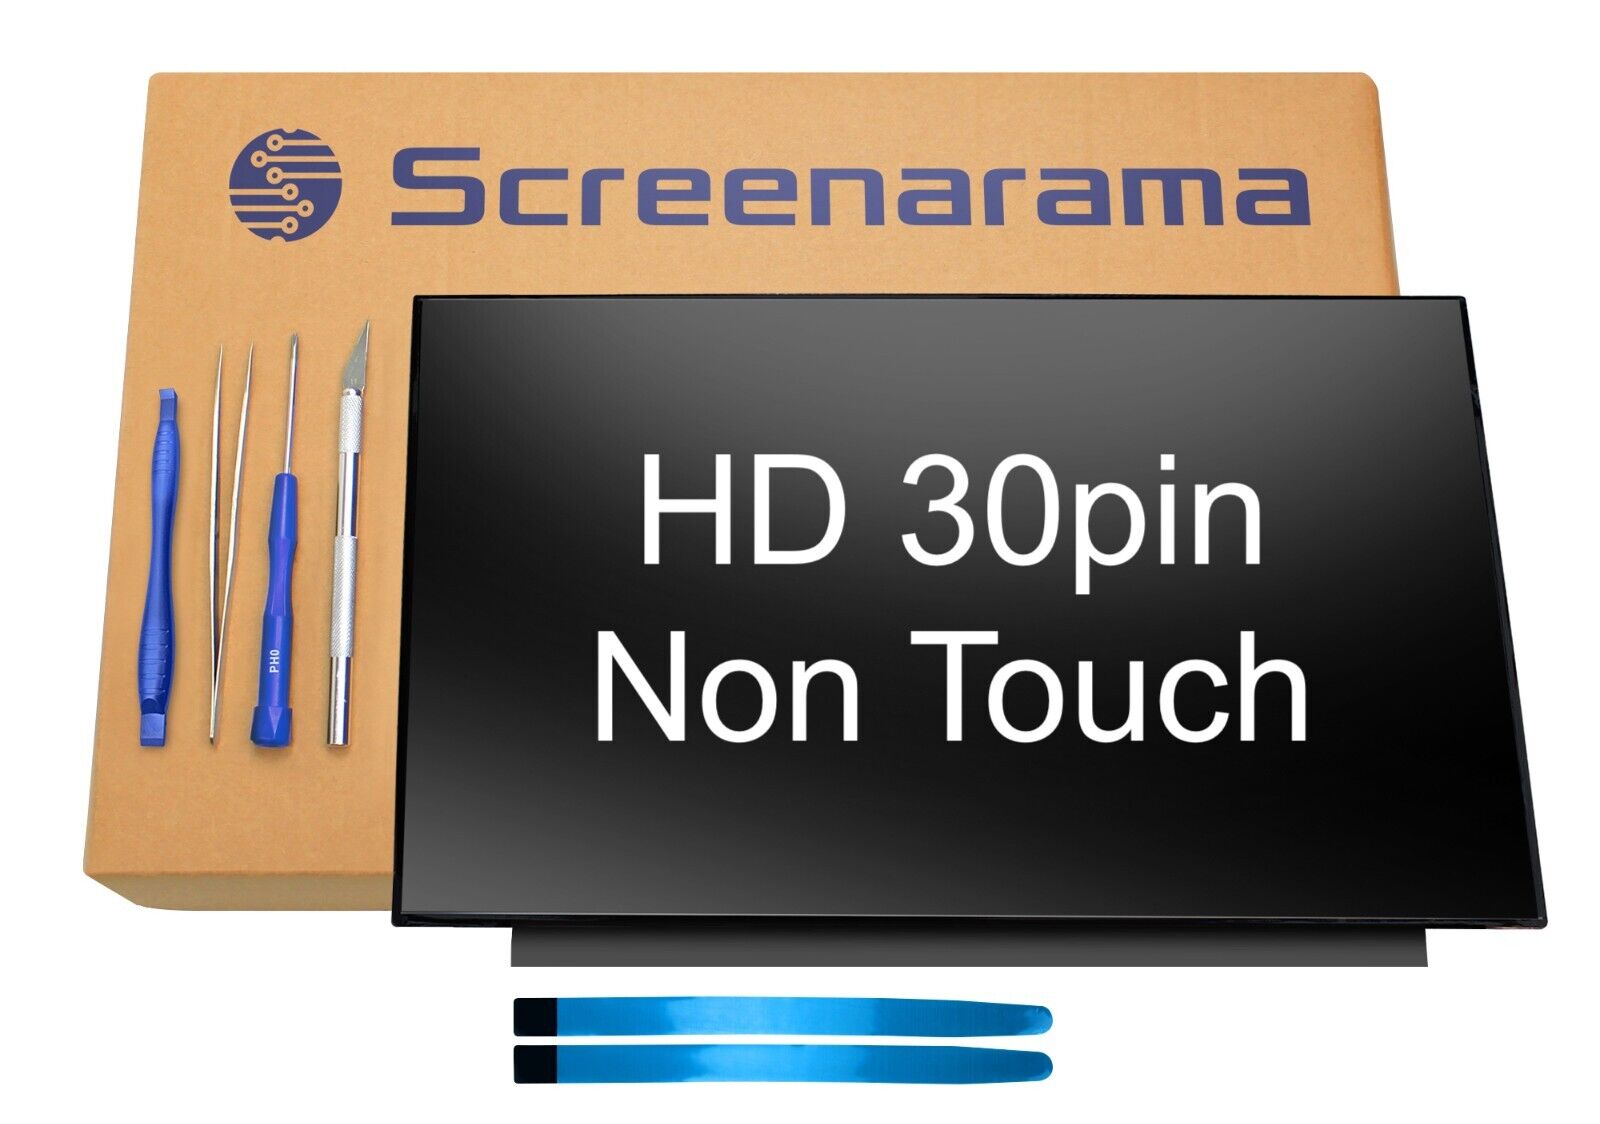 Asus E410M E410MA L410M L410MA HD 30pin LCD Screen + Tools SCREENARAMA * FAST